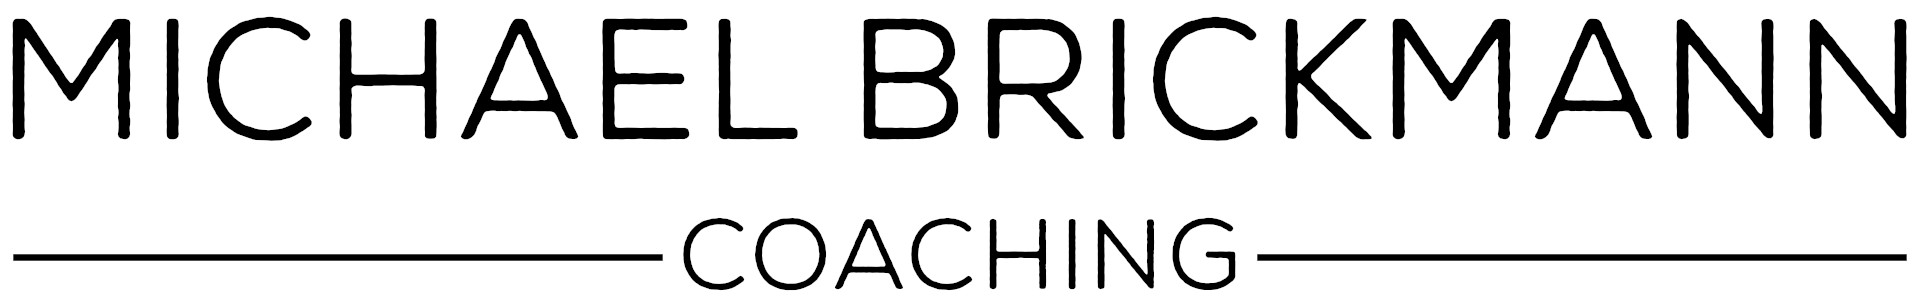 Michael Brickmann - Coaching